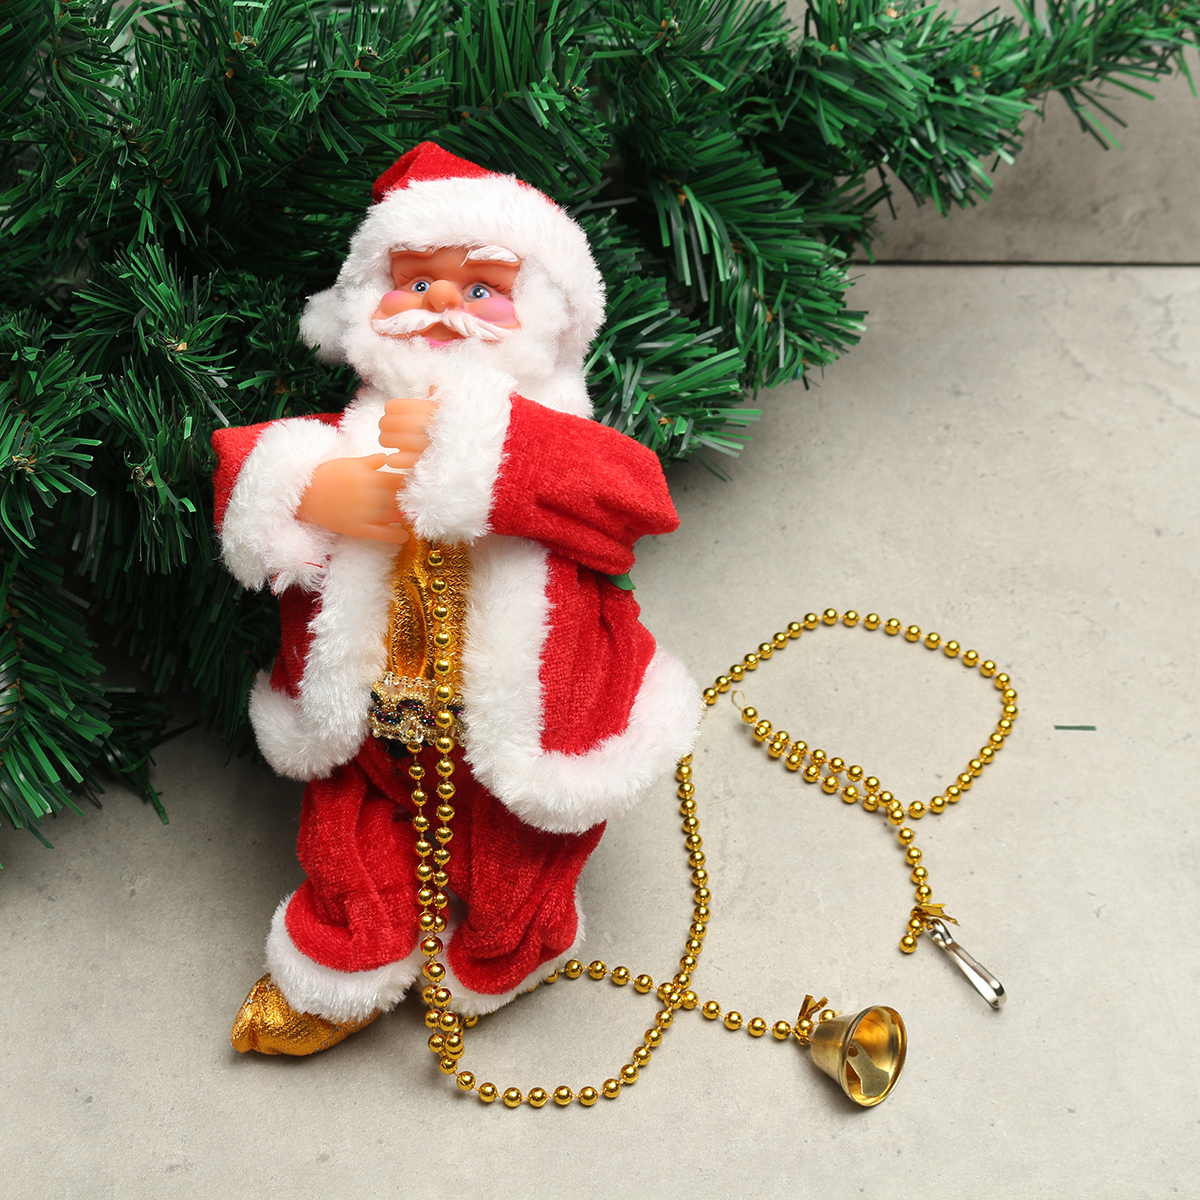 Christmas-Senta-Claus-Climbing-Ladder-Hanging-Decorations-Holiday-Gift-1333945-11